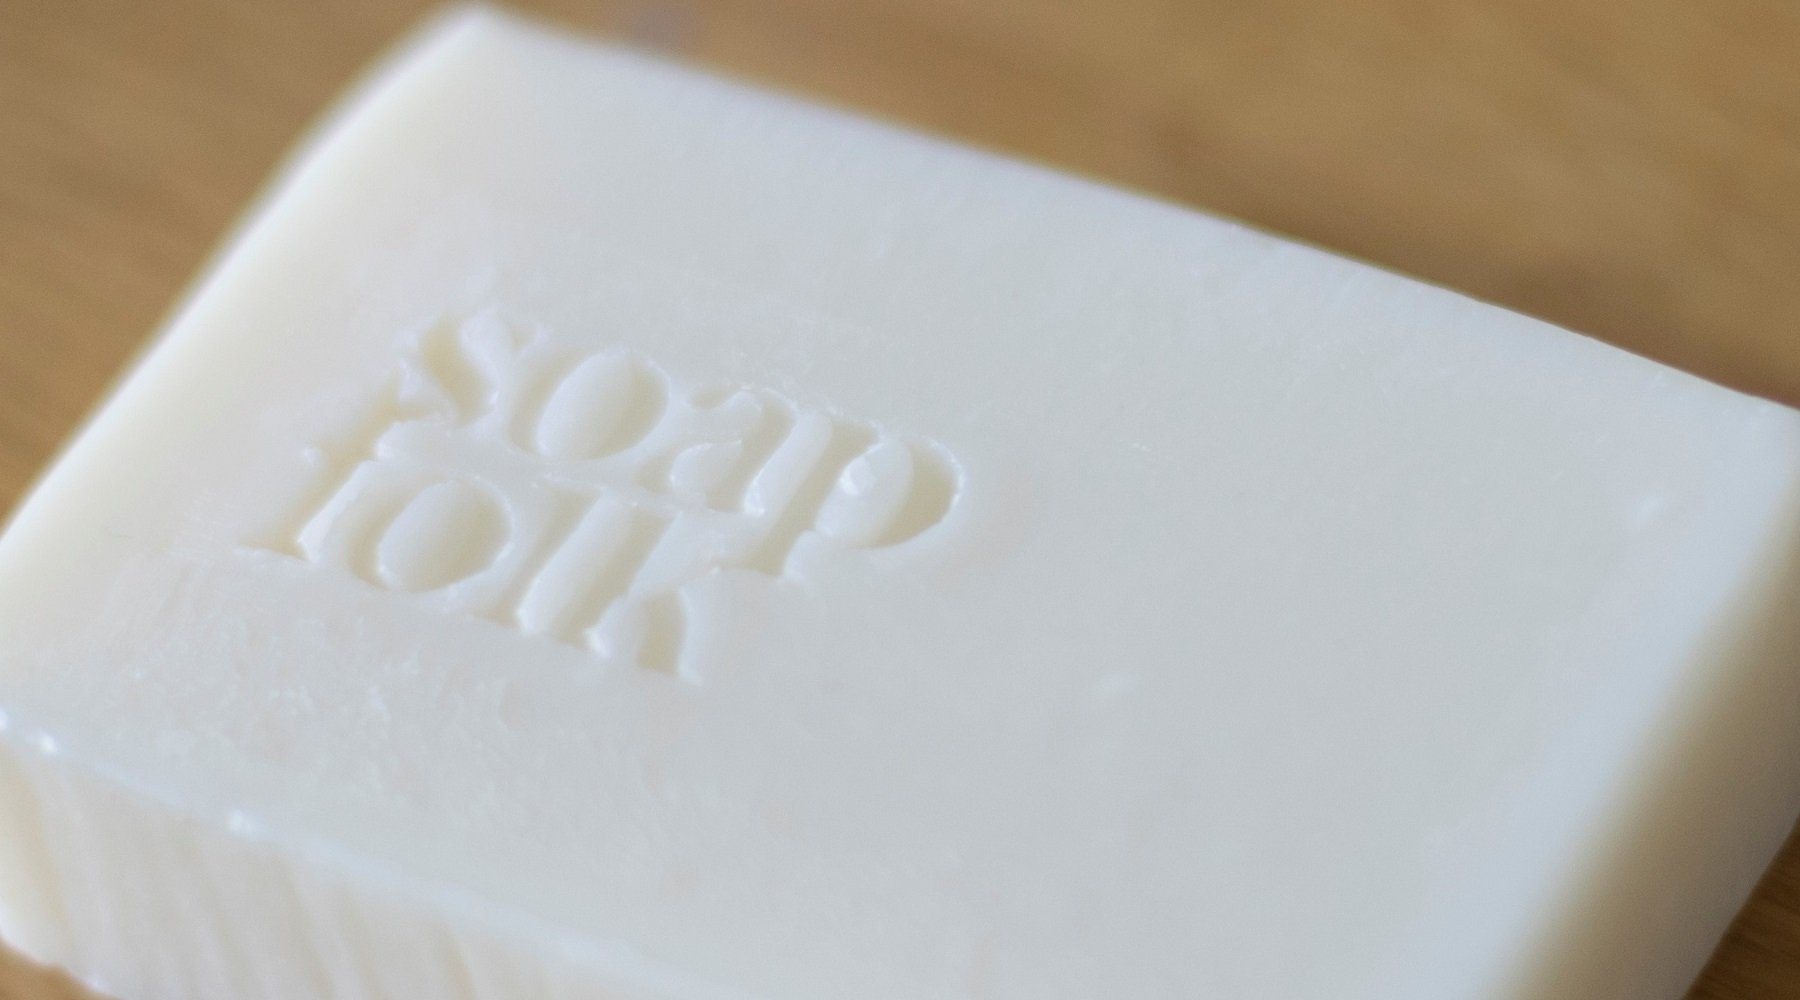 The joy of natural handmade soap